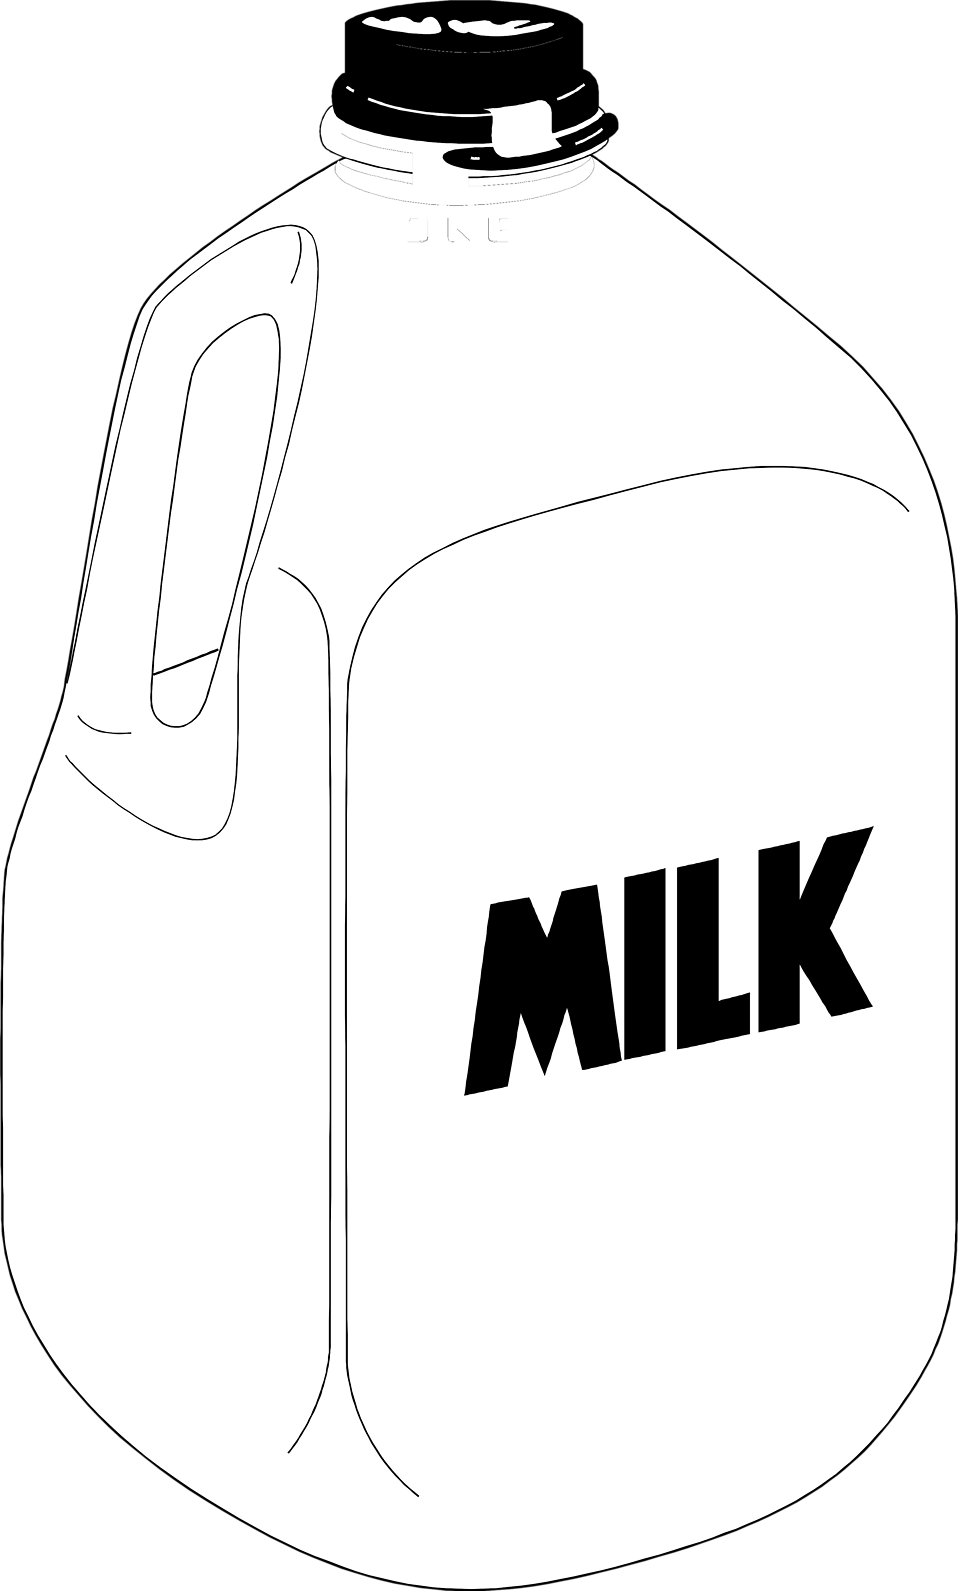 Milk   Free Stock Photo   Illustration Of A Plastic Gallon Jug Of Milk